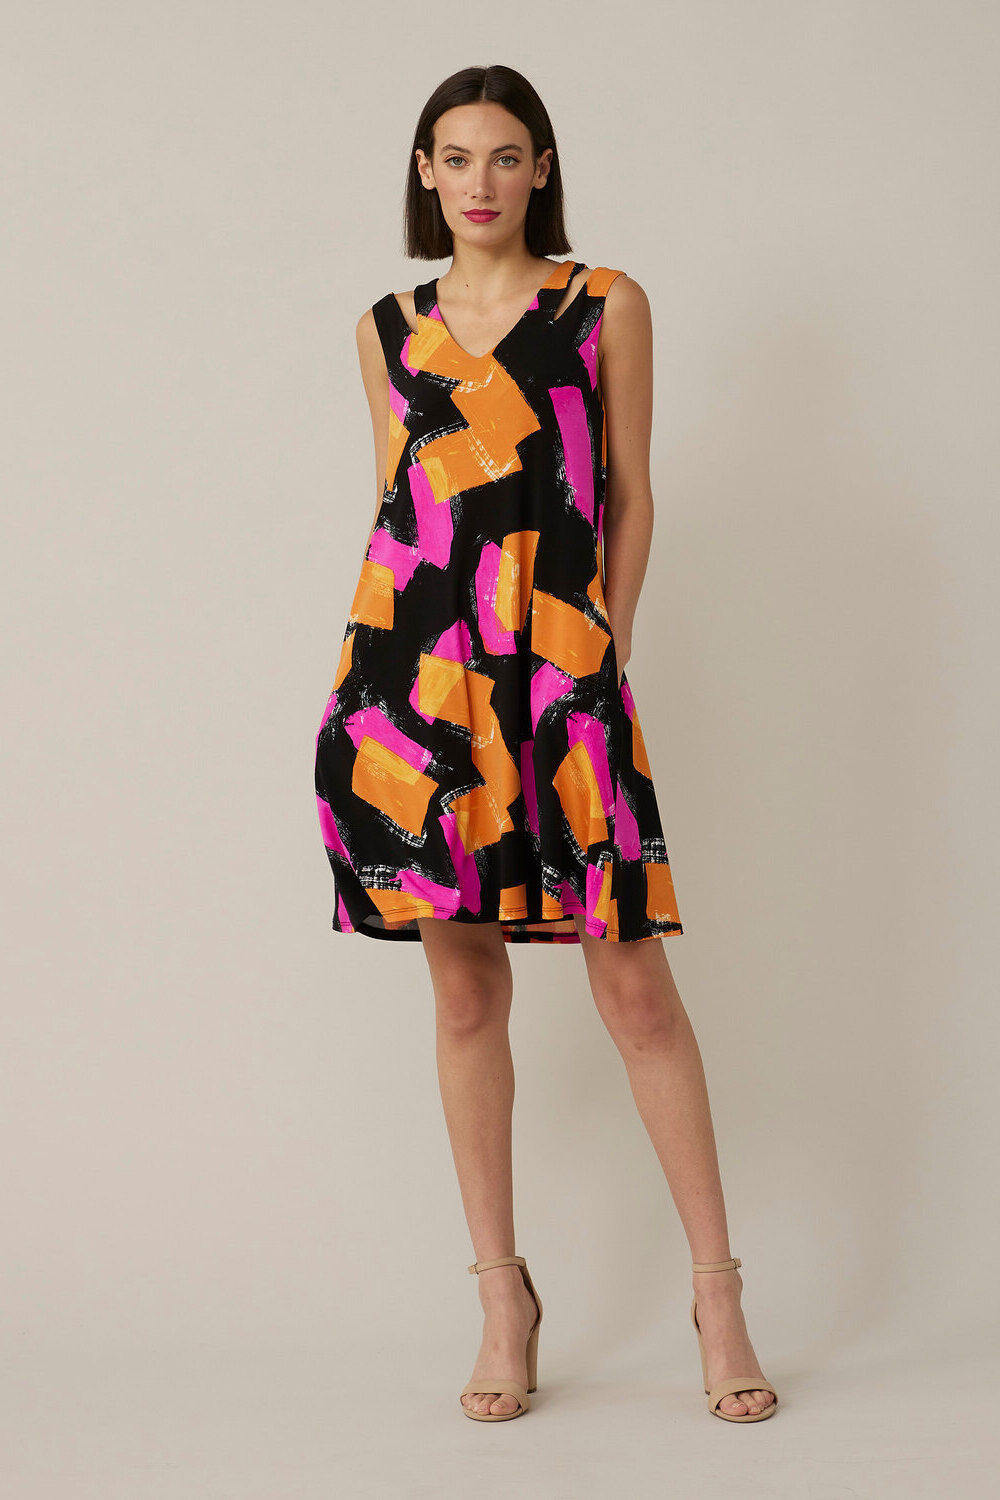 Joseph Ribkoff Fit & Flare Dress Style 221051. Black/multi